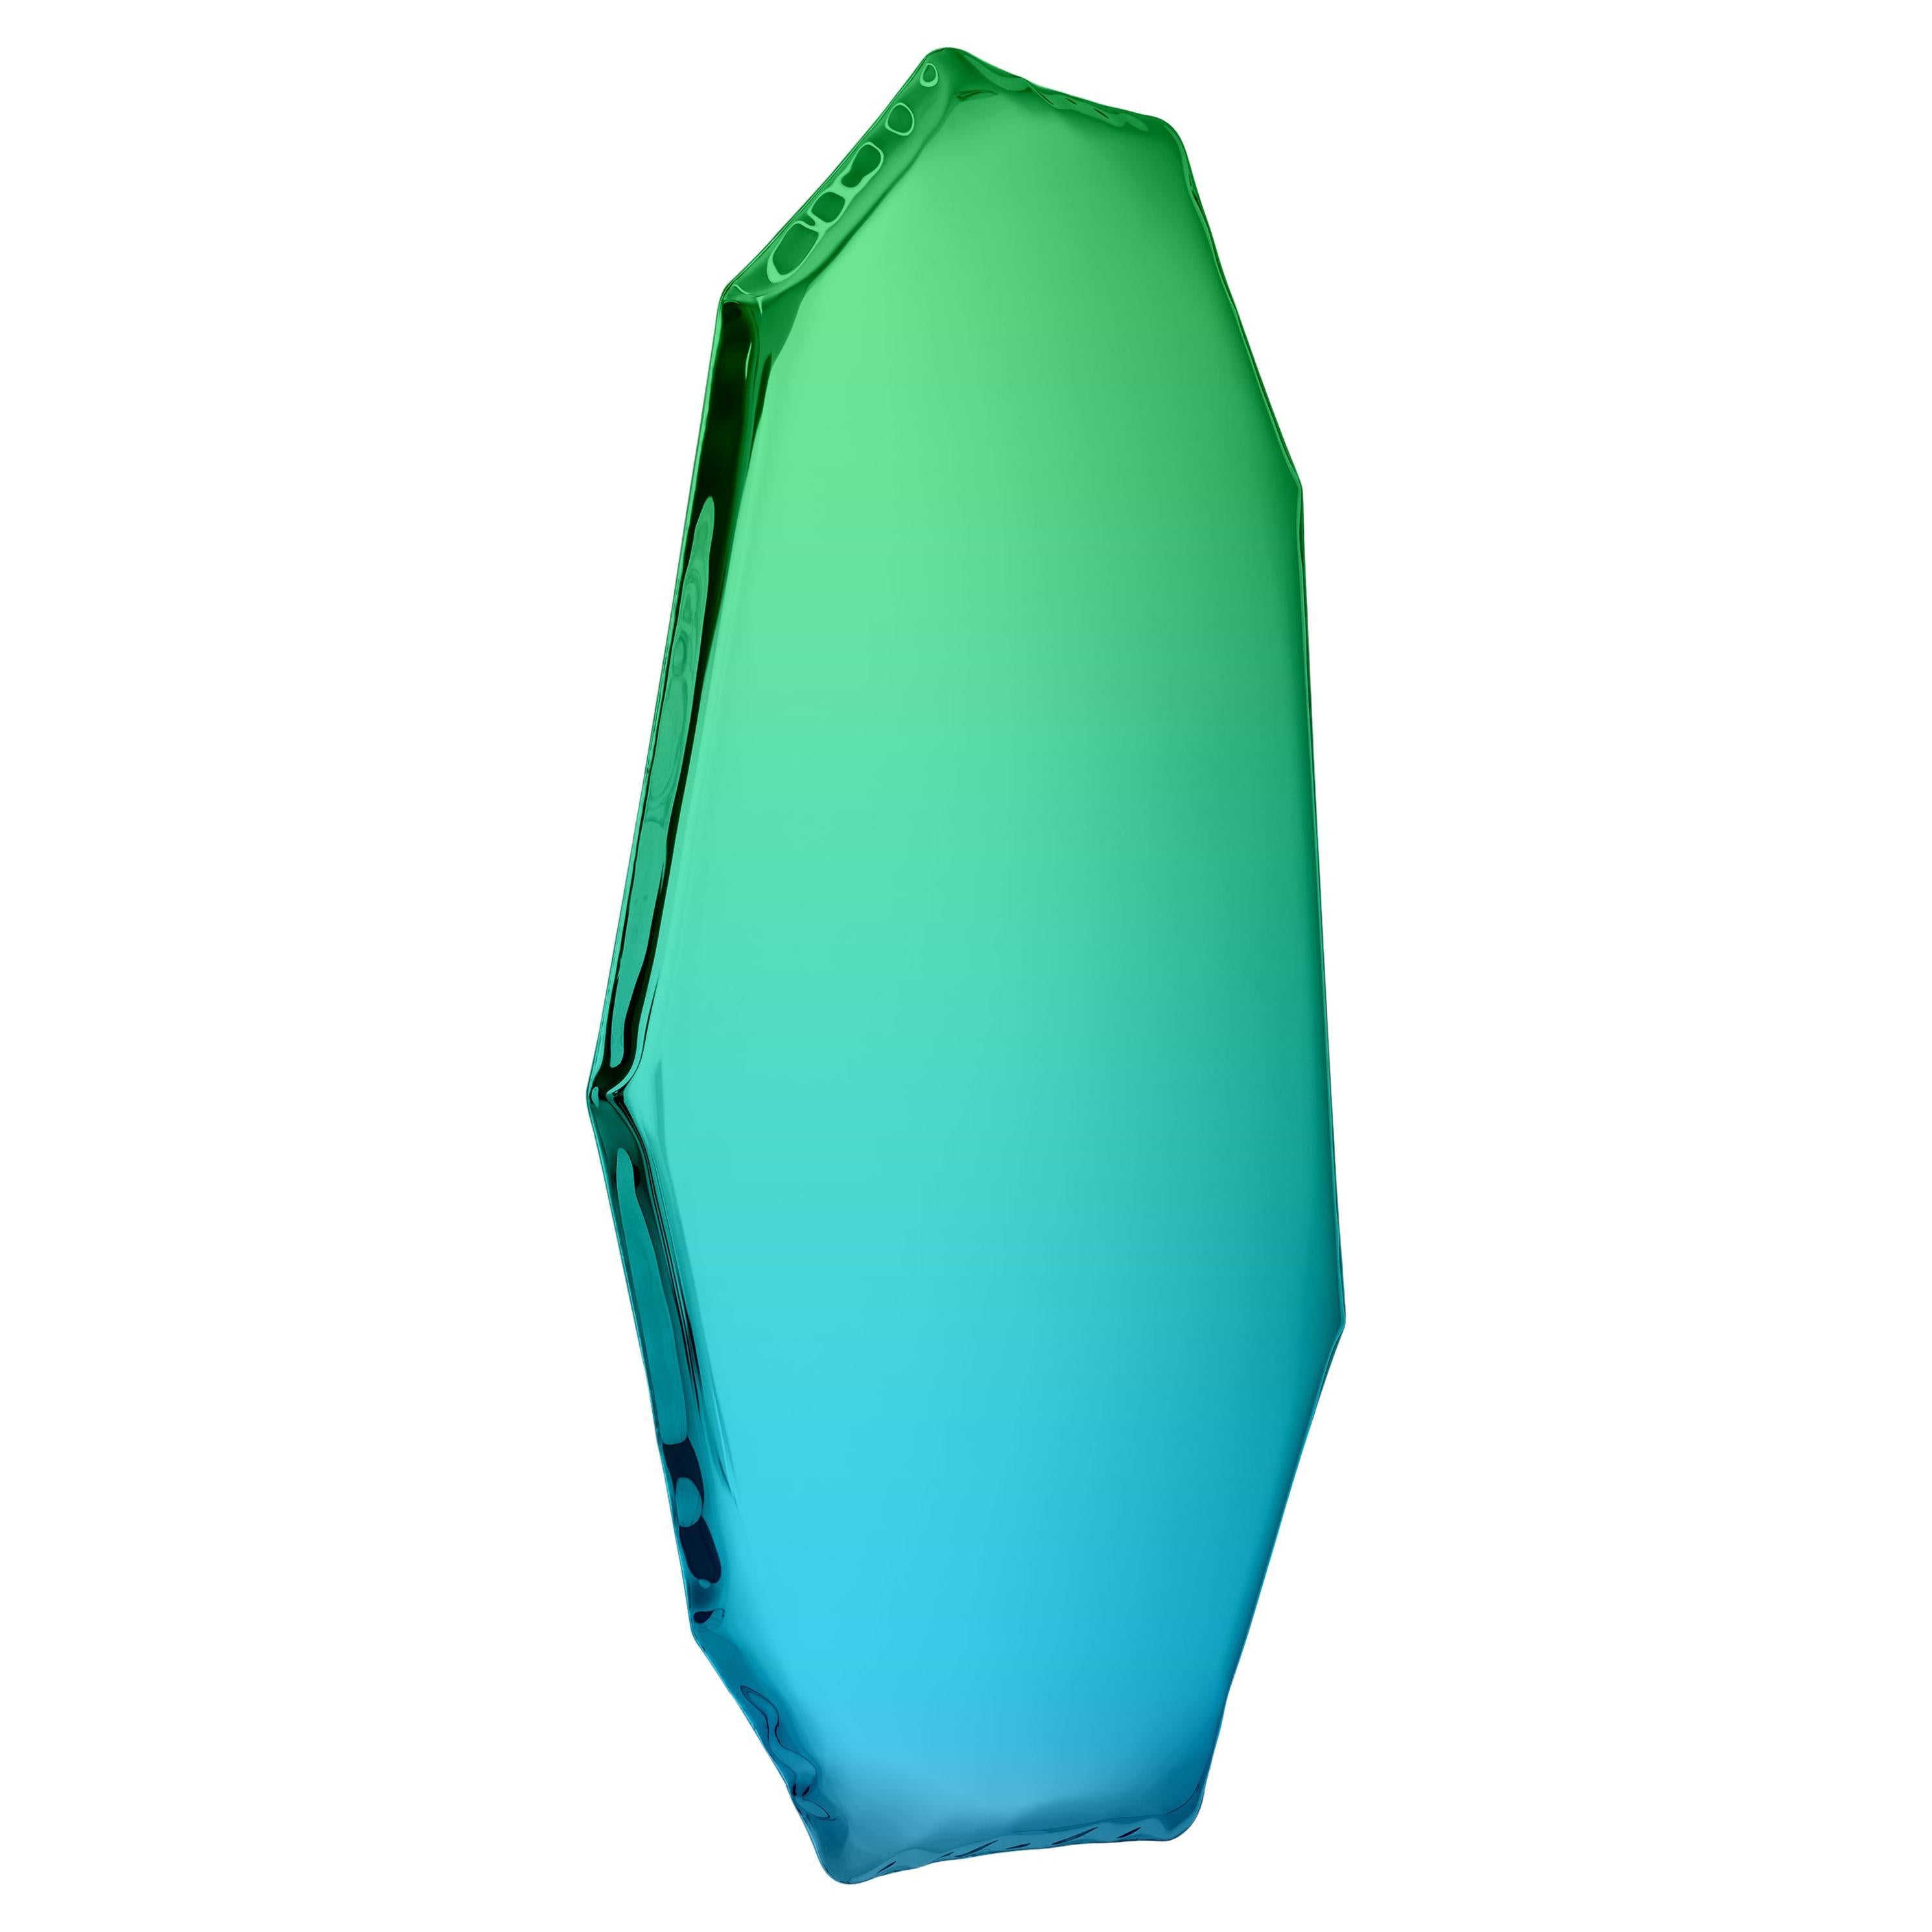 Sapphire Emerald Tafla C3 Sculptural Wall Mirror by Zieta For Sale